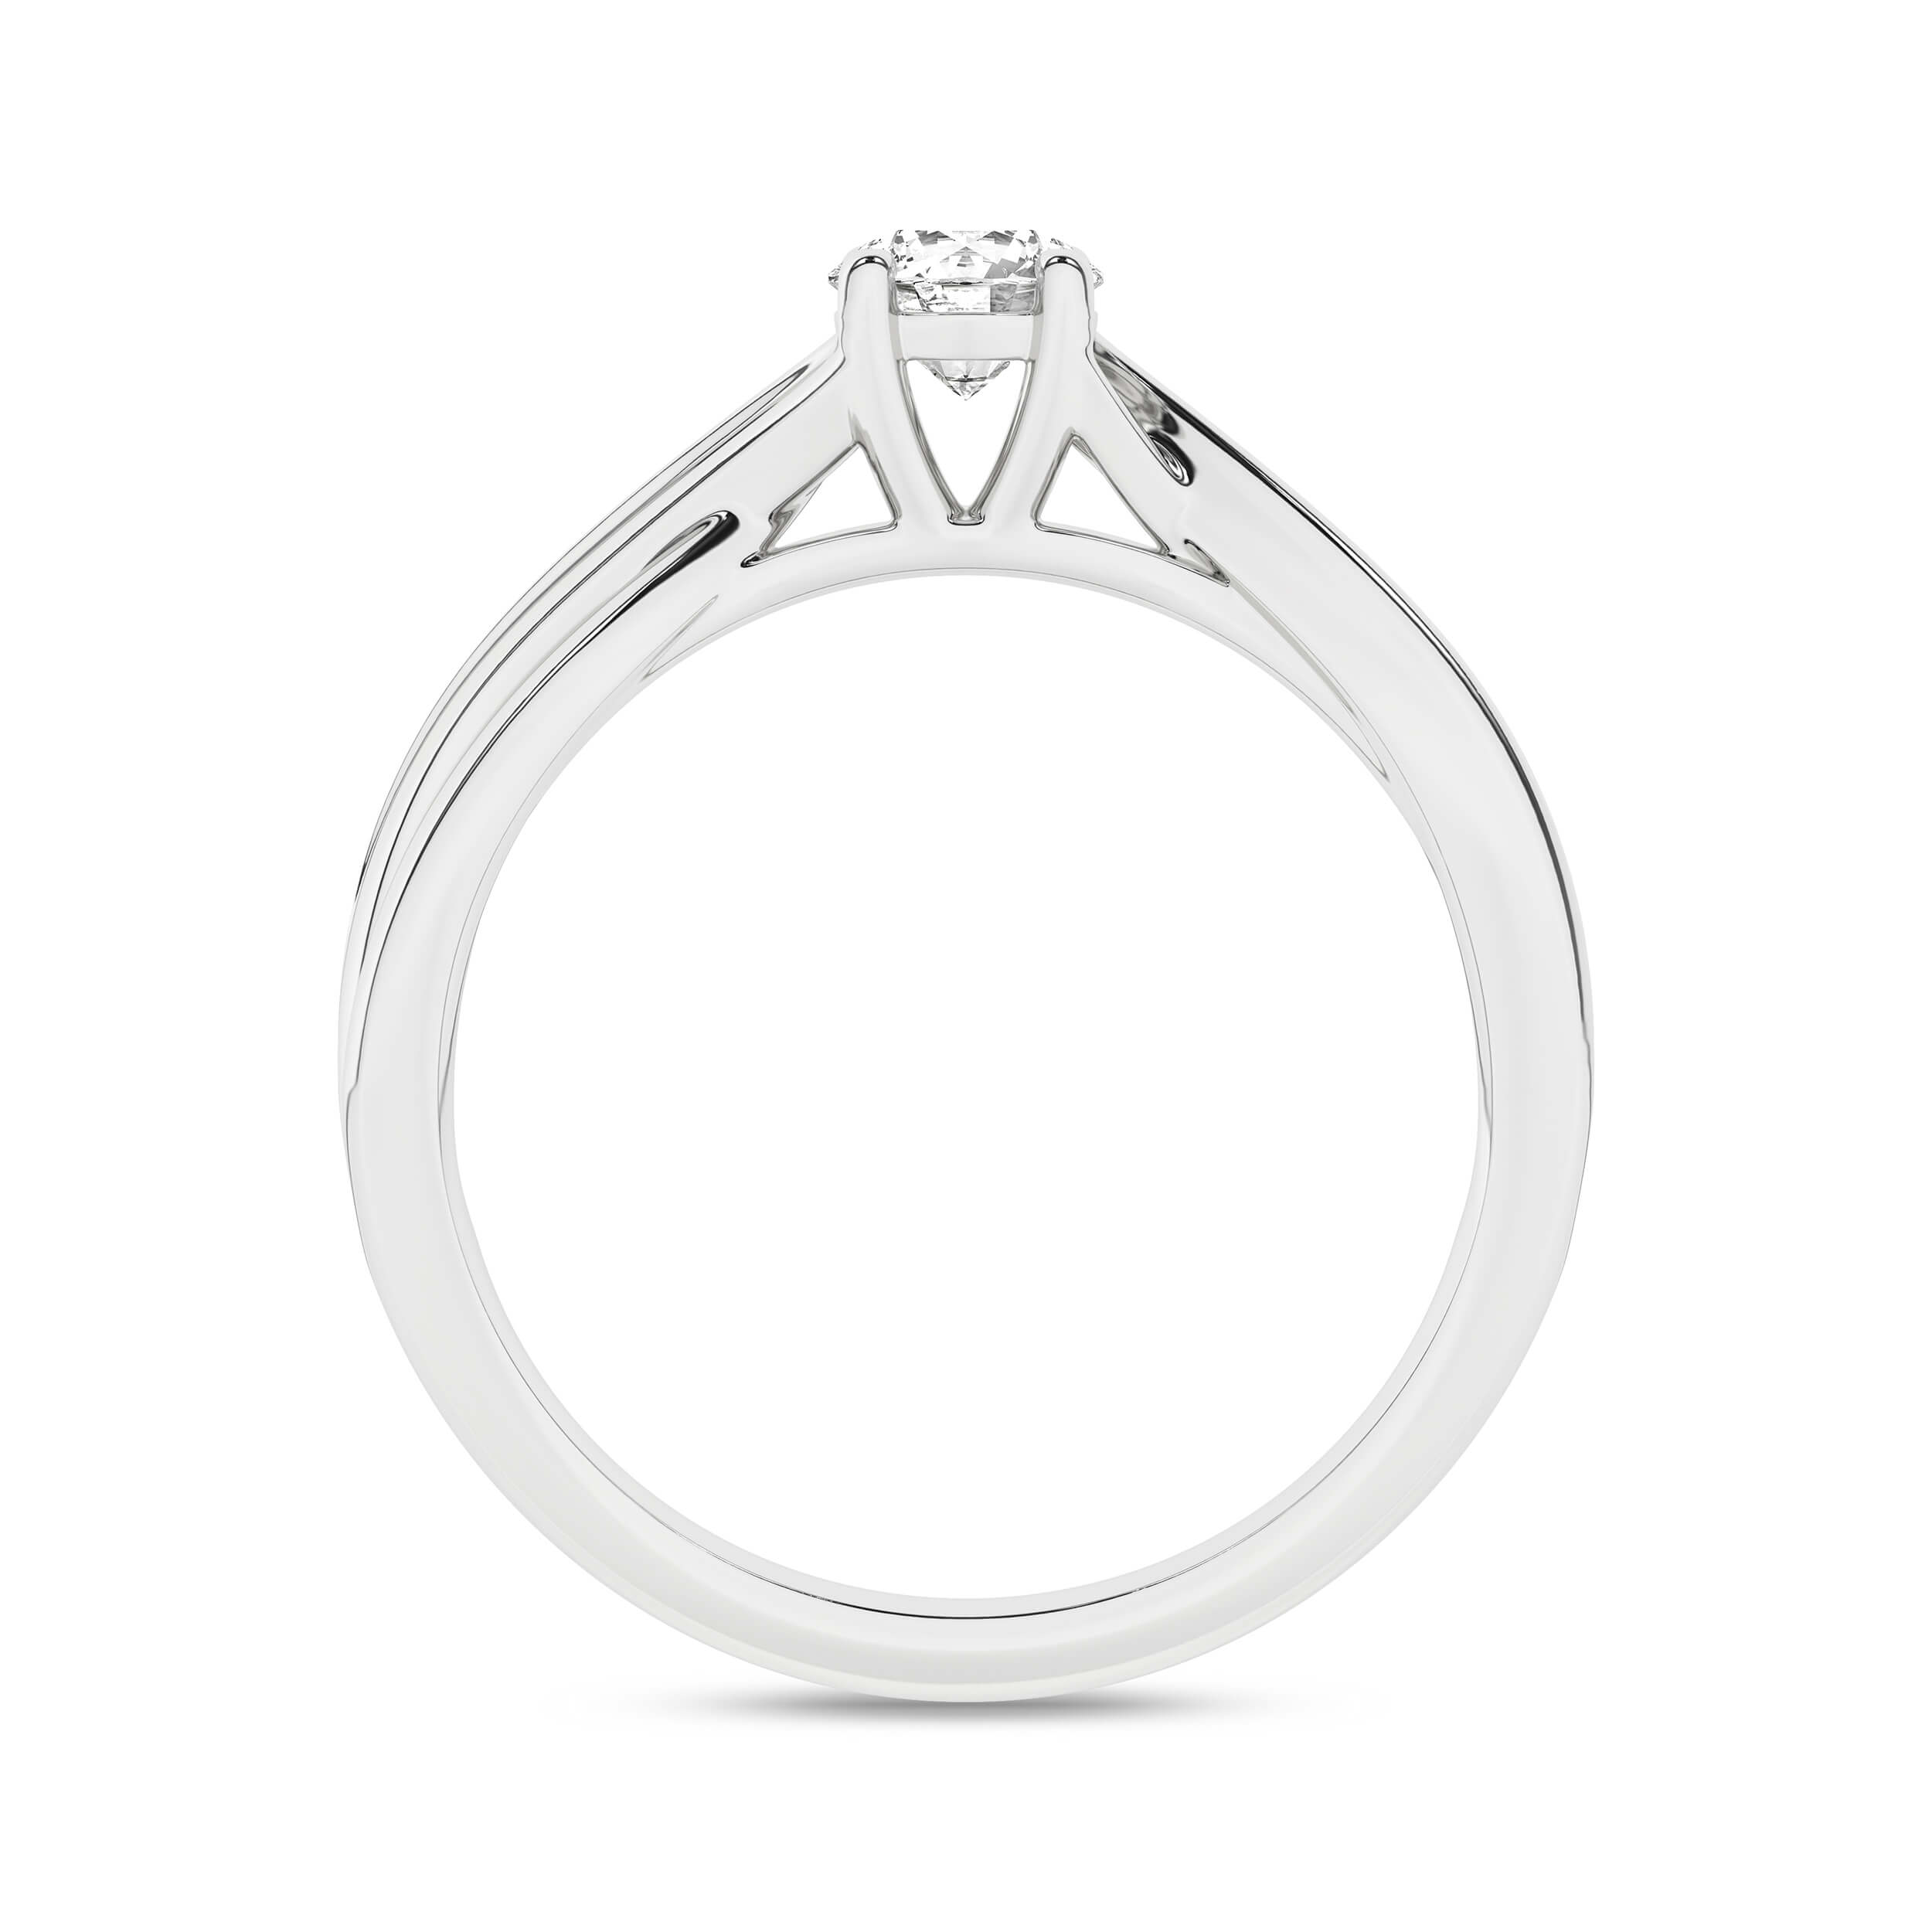 Inel de logodna din Aur Alb 14K cu Diamant 0.33Ct, articol RS1301, previzualizare foto 3